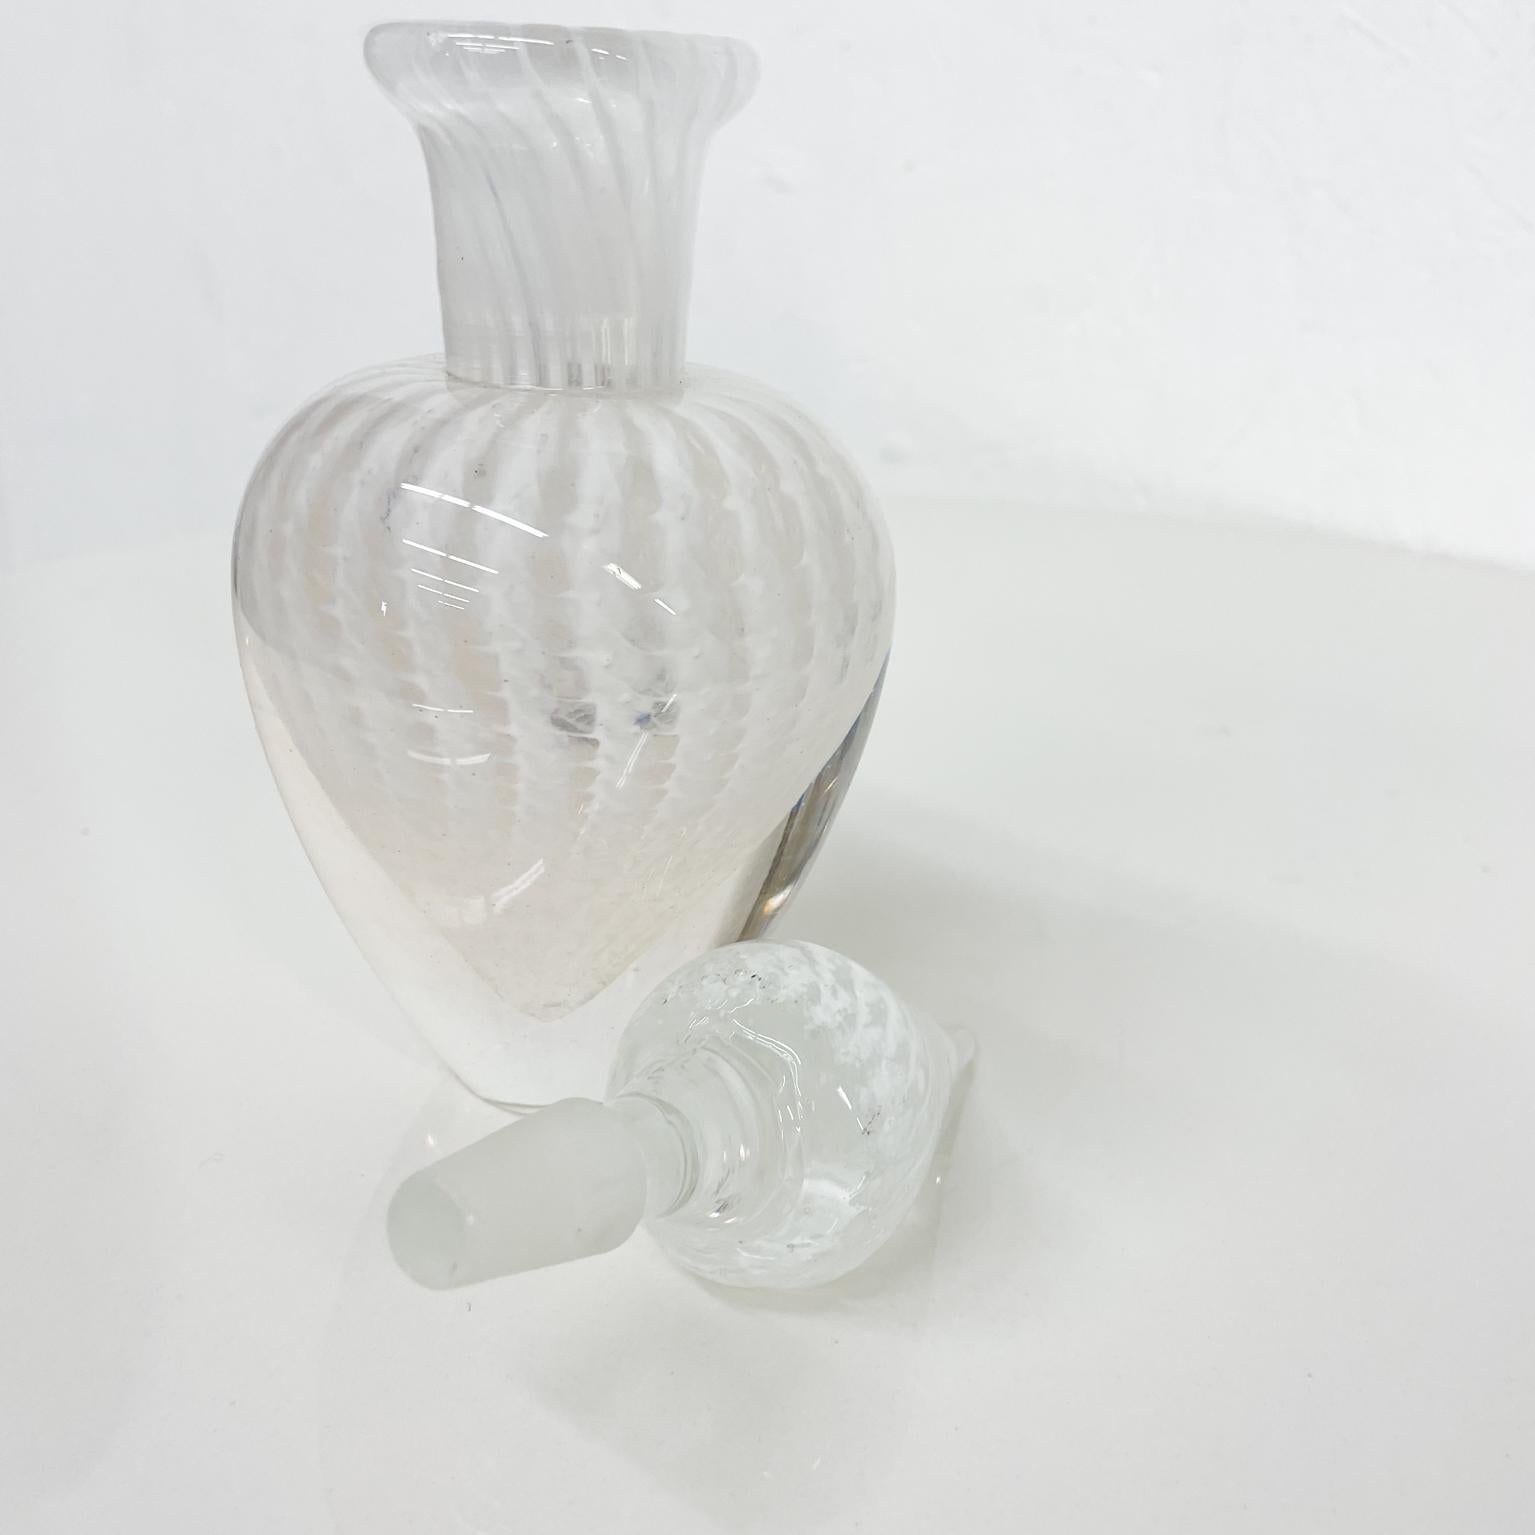 Lovely Murano Swirled White Art Glass Perfume Bottle with Stopper Italy 2